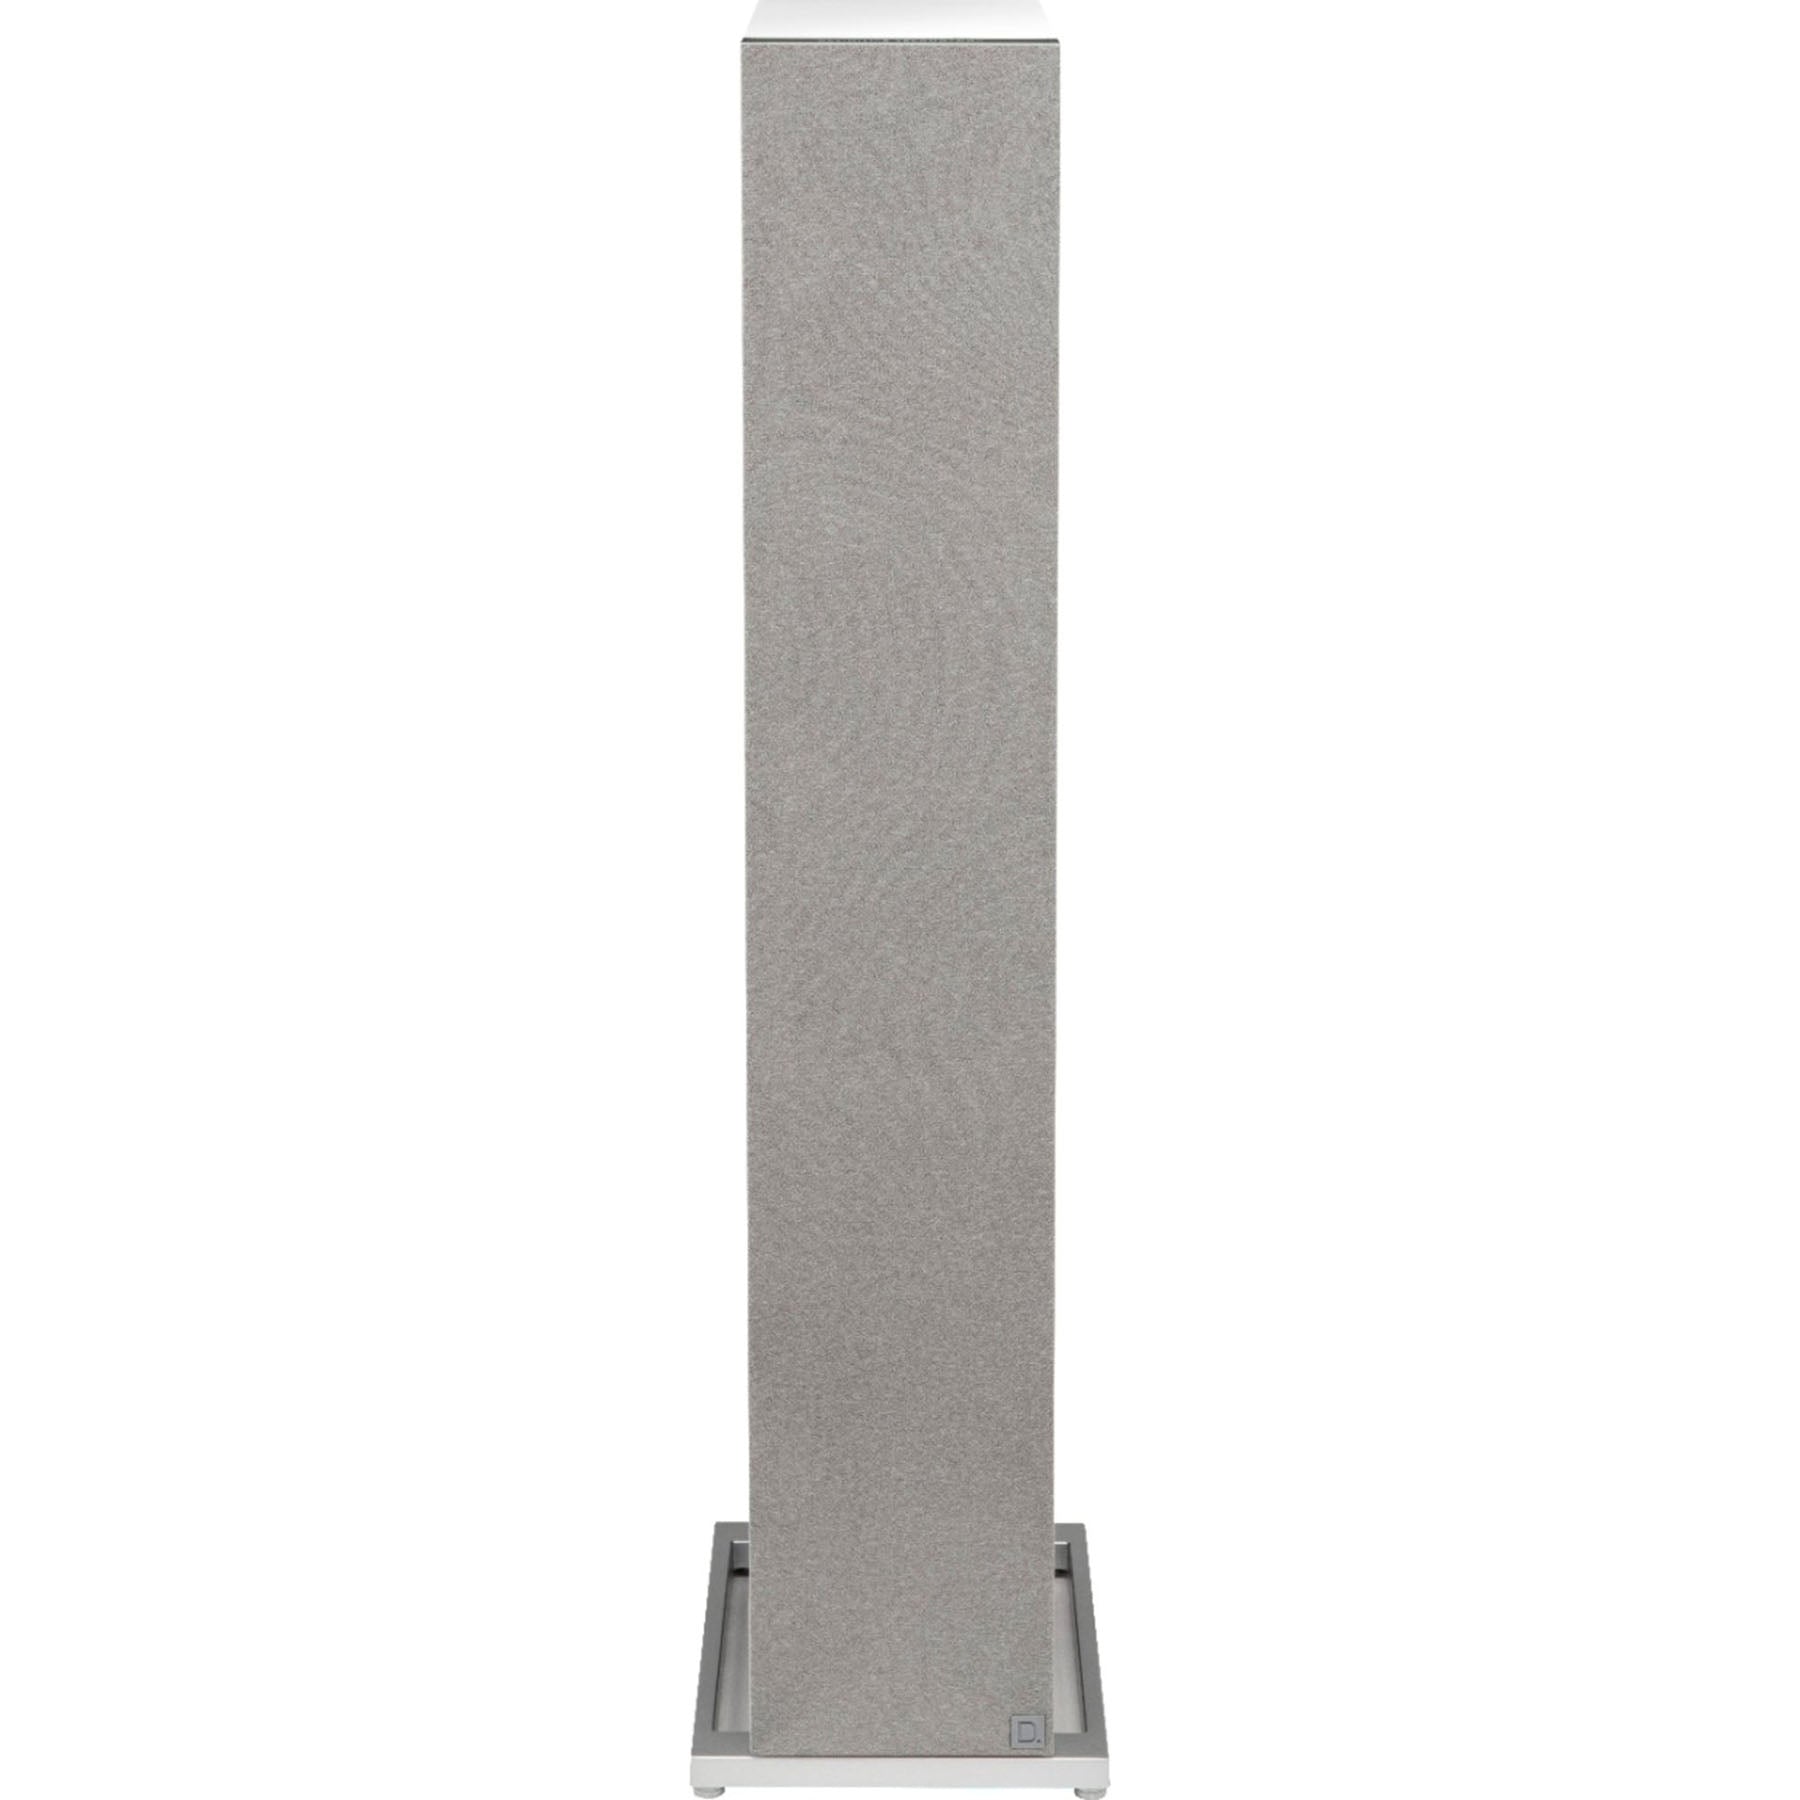 [Ex-demo] Definitive Technology Demand Series D17 Floorstanding Speaker (pair)